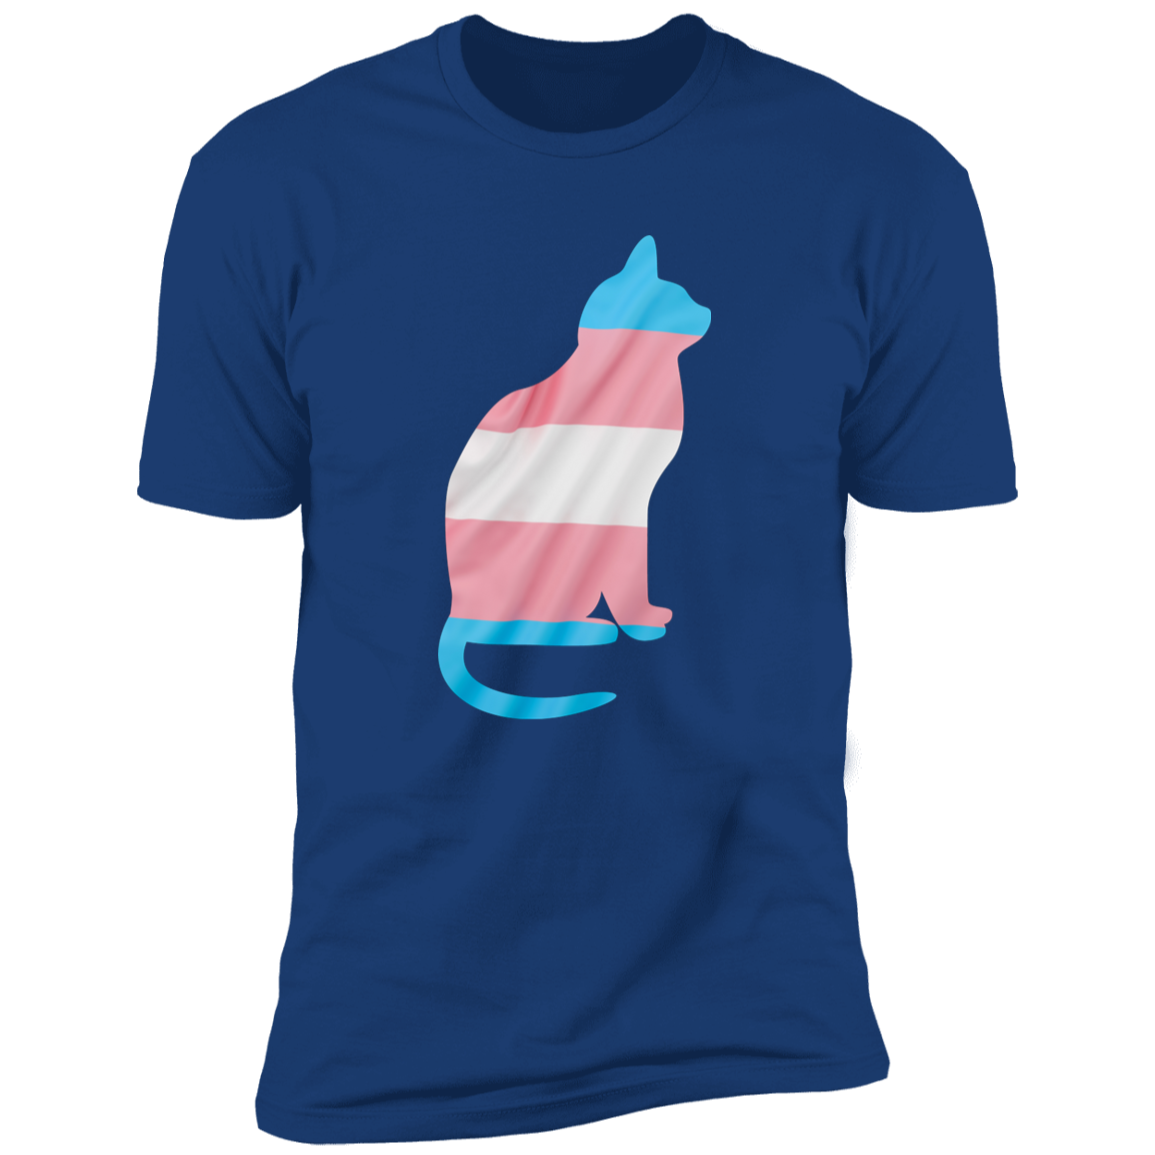 Trans Pride Cat Pride T-shirt, Trans Pride Cat Shirt for humans, in royal blue